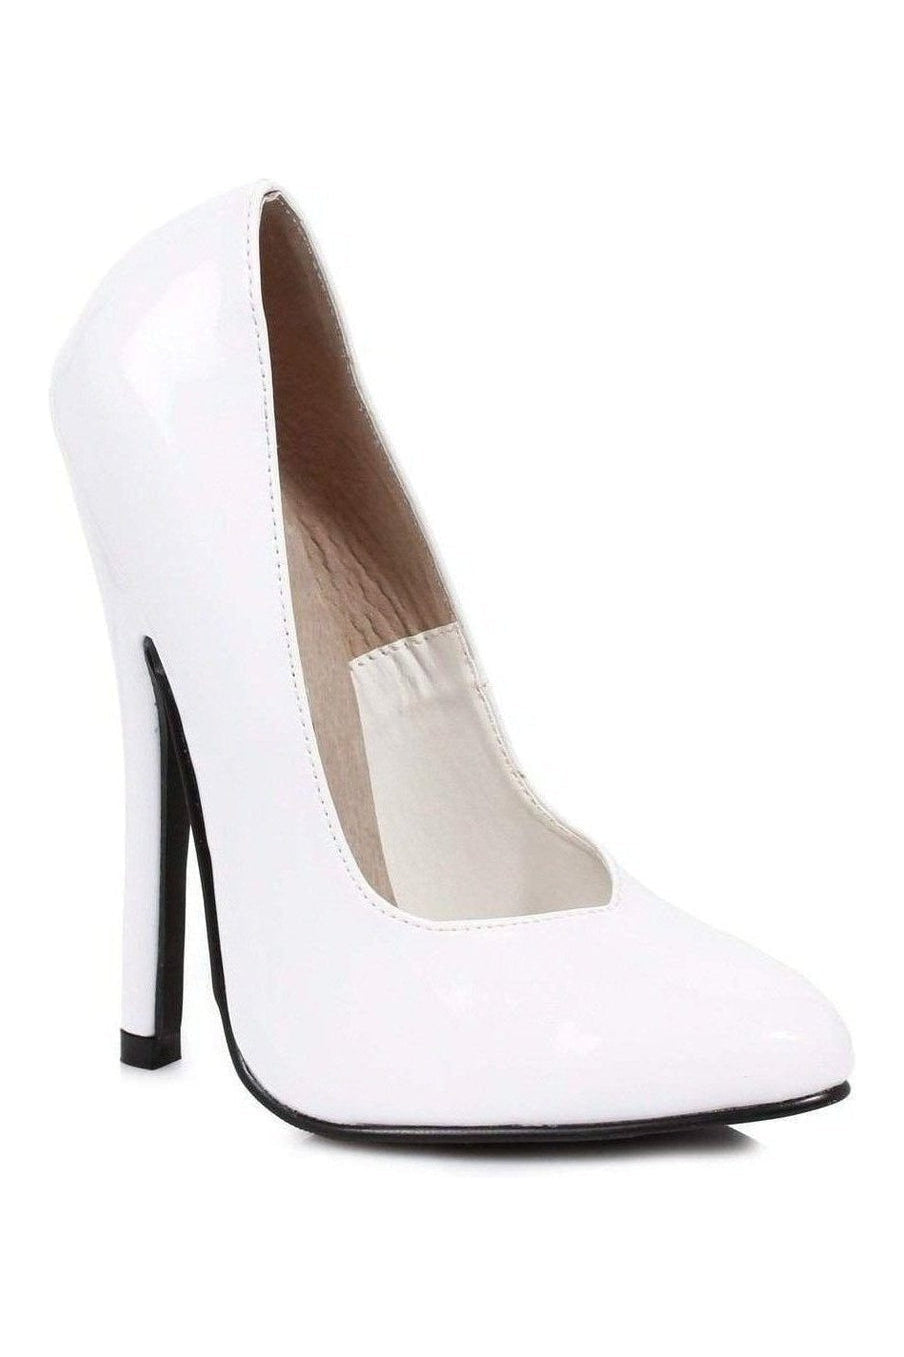 8260 Pump | White Patent-Pumps- Stripper Shoes at SEXYSHOES.COM